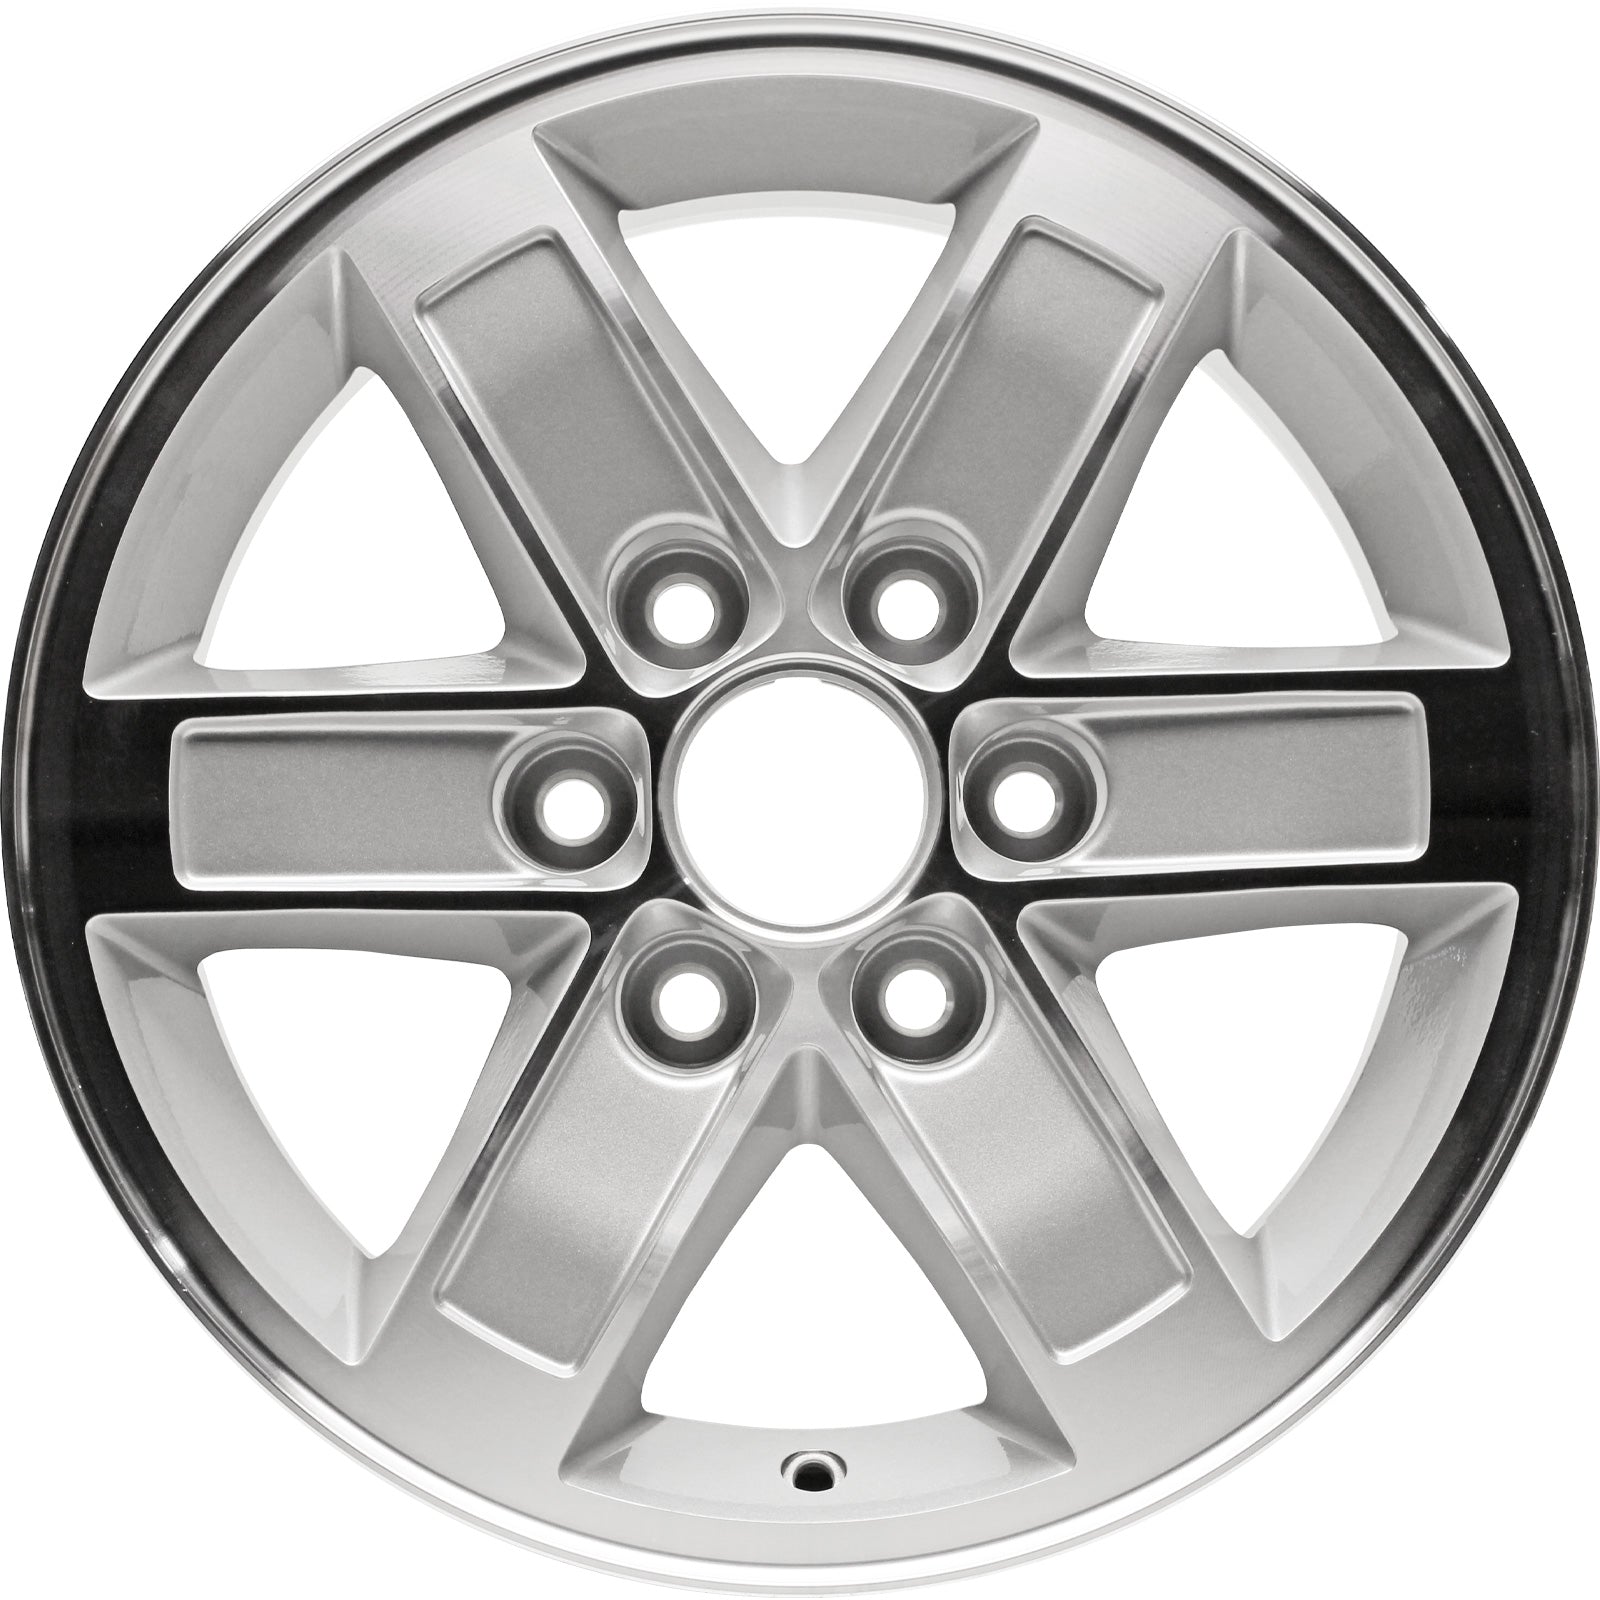 New 17" 2009-2014 GMC Savana 1500 Replacement Alloy Wheel - 5296 – Factory  Wheel Replacement